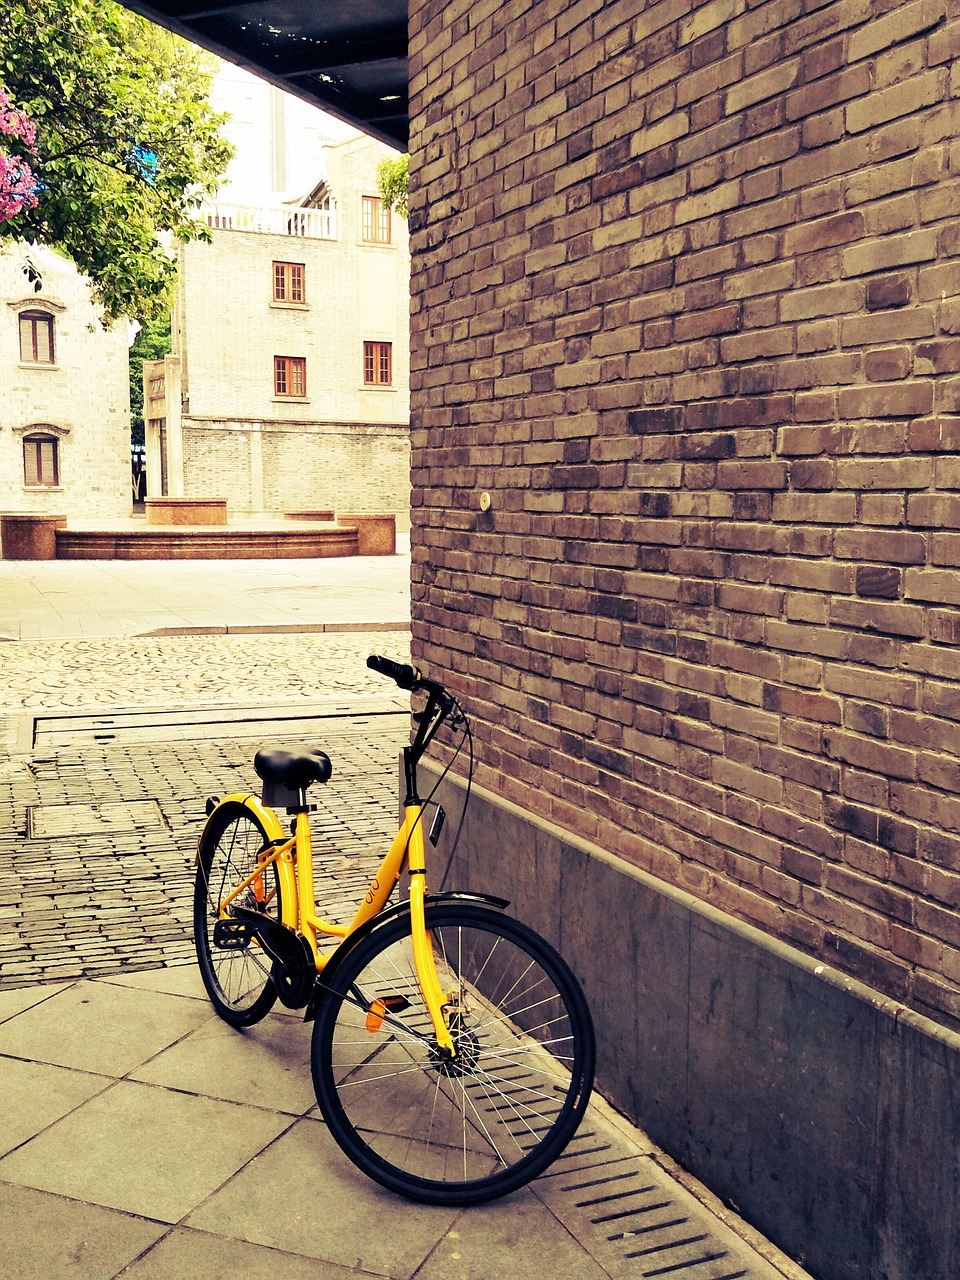 shared bike tourism bicycle free photo